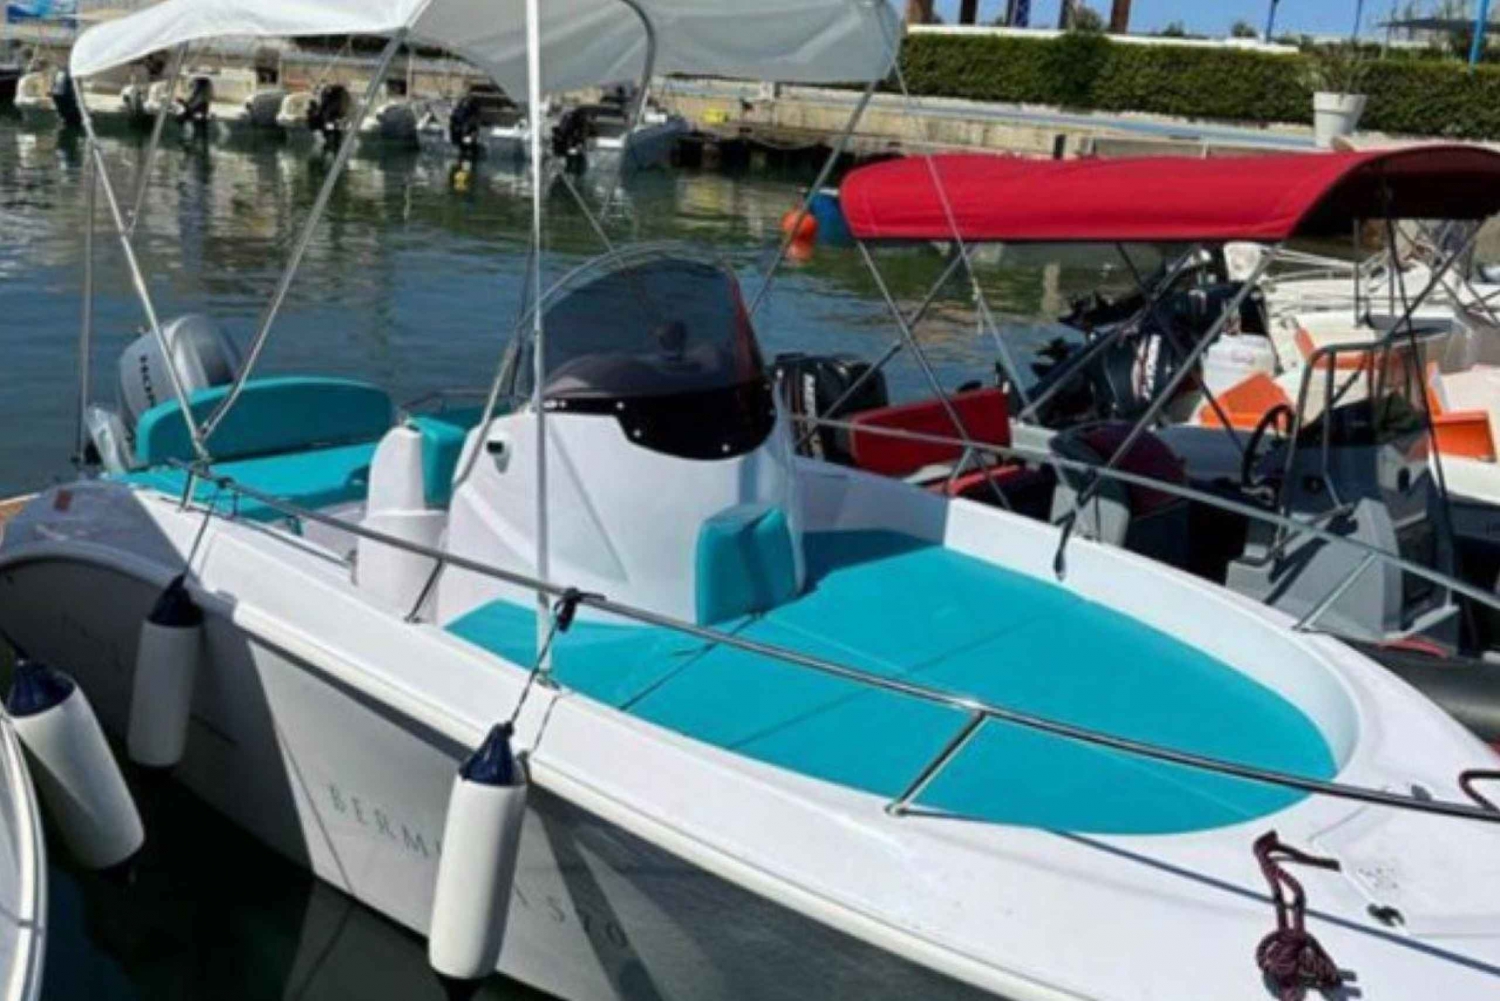 Tropea: Fabulous Boat Rental - No boat license needed